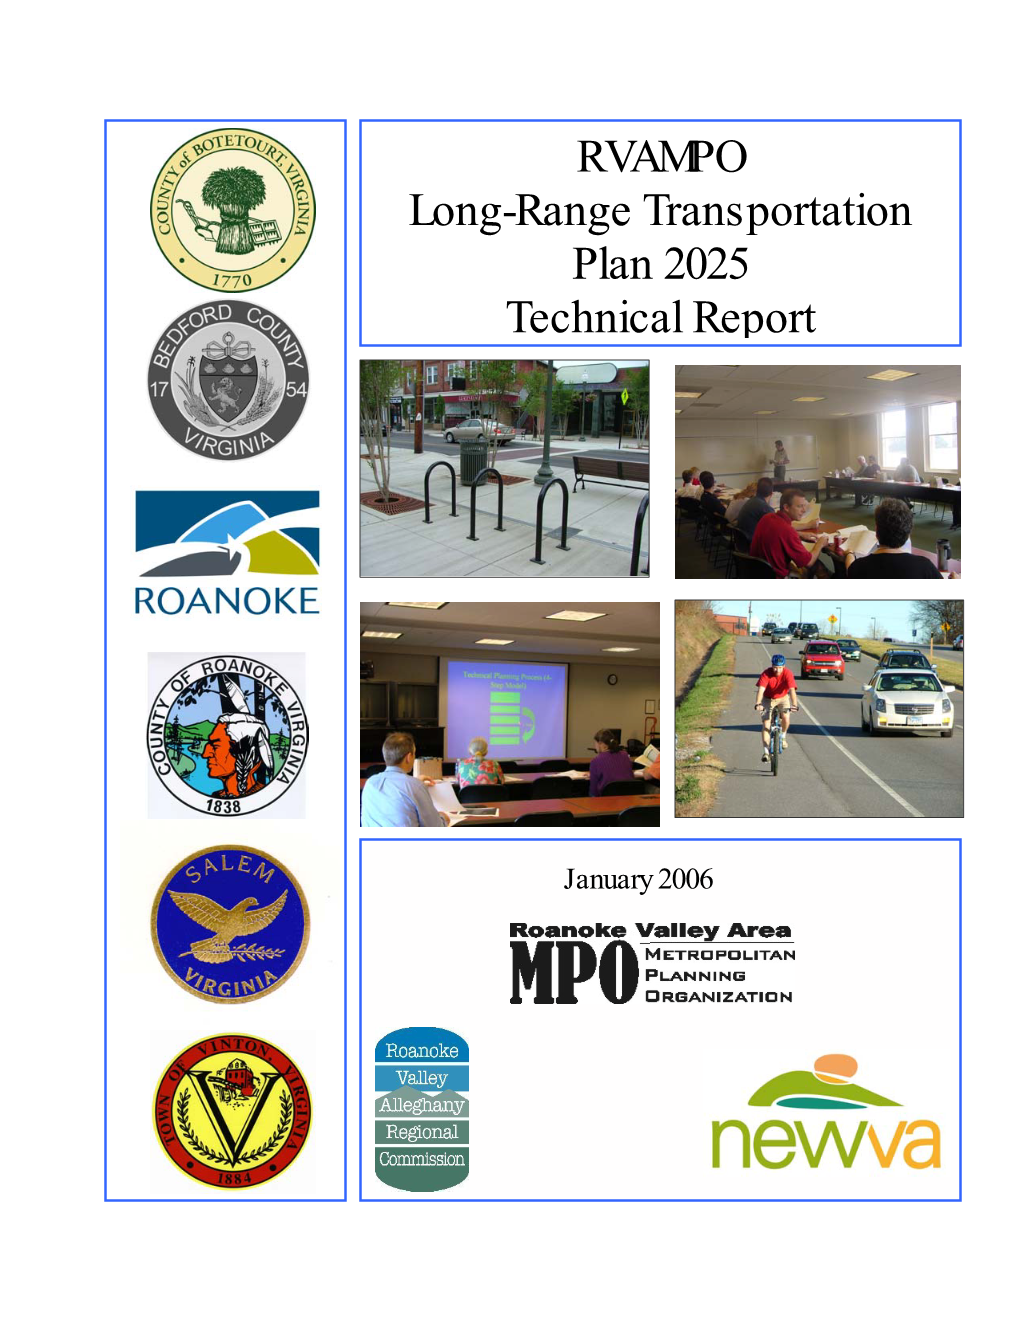 RVAMPO Long-Range Transportation Plan 2025 Technical Report